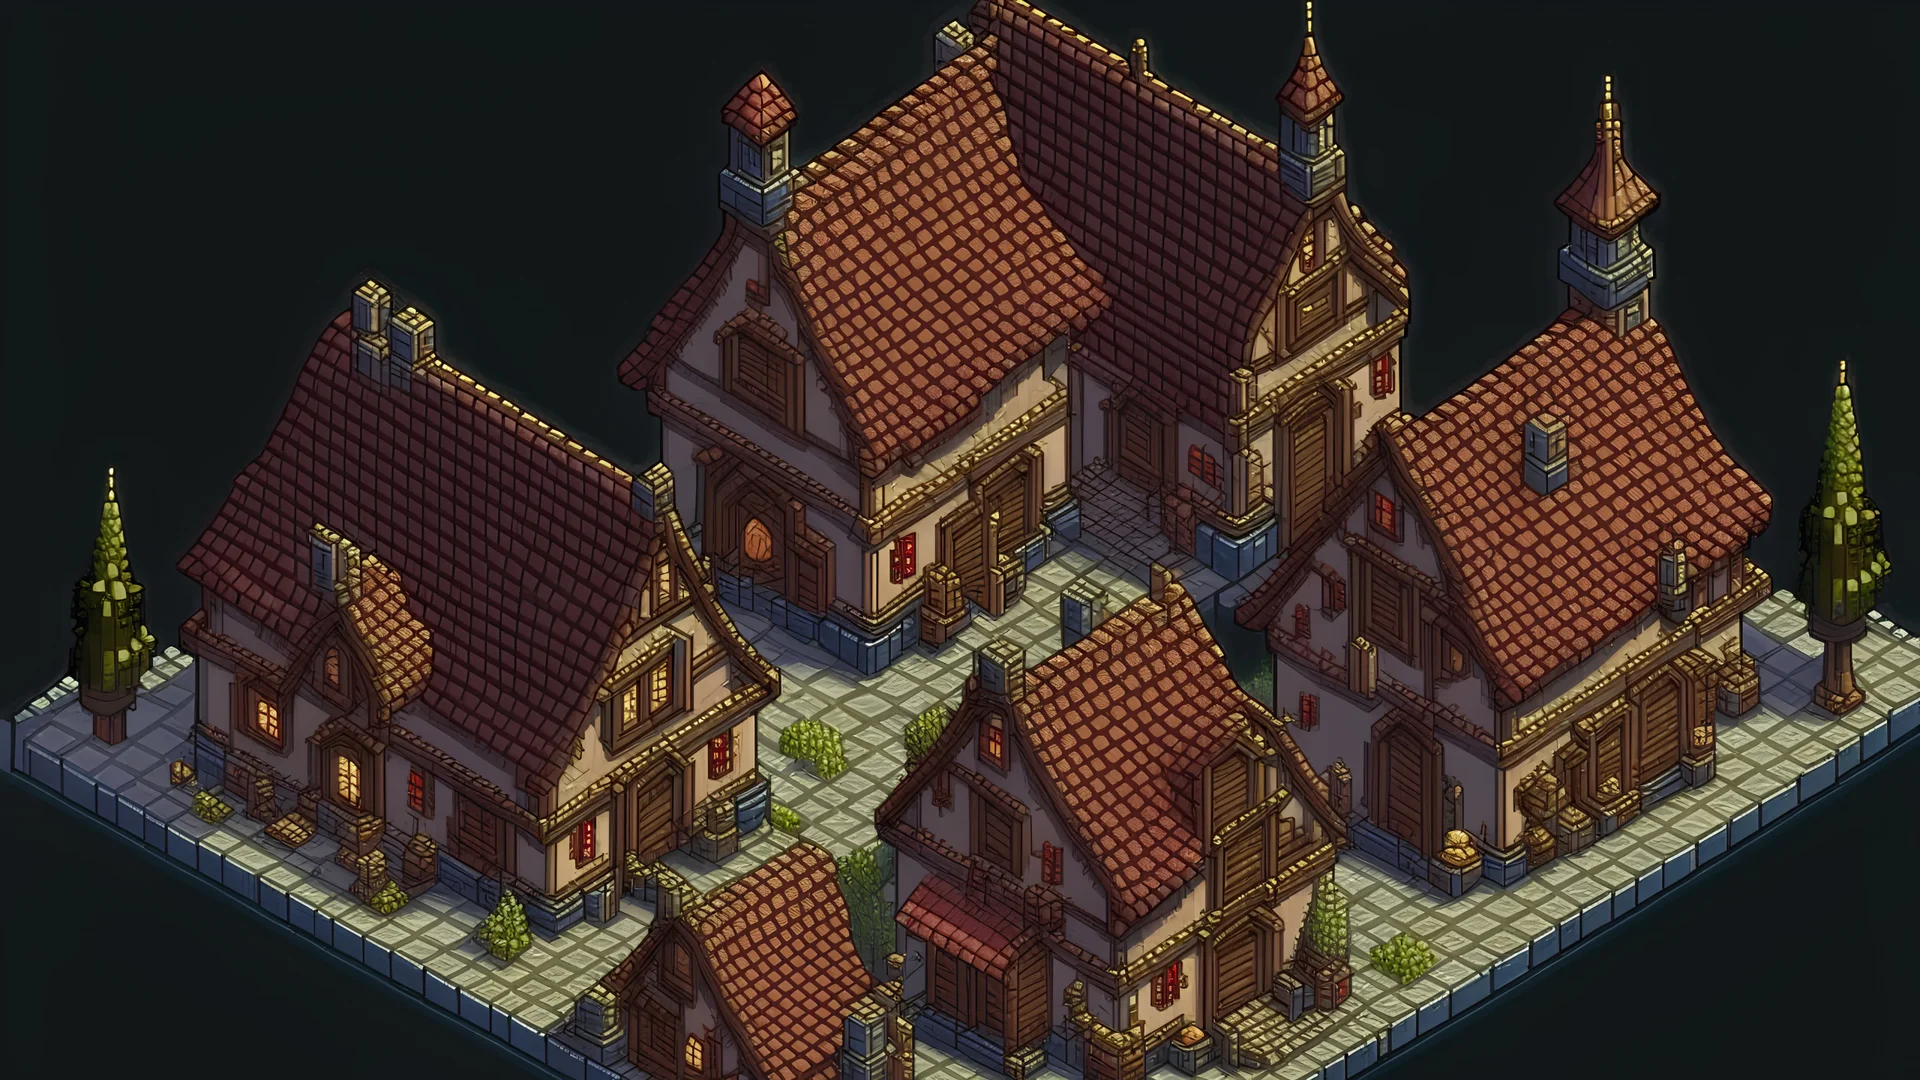 The premises of the medieval magical barracks pixelart 3в